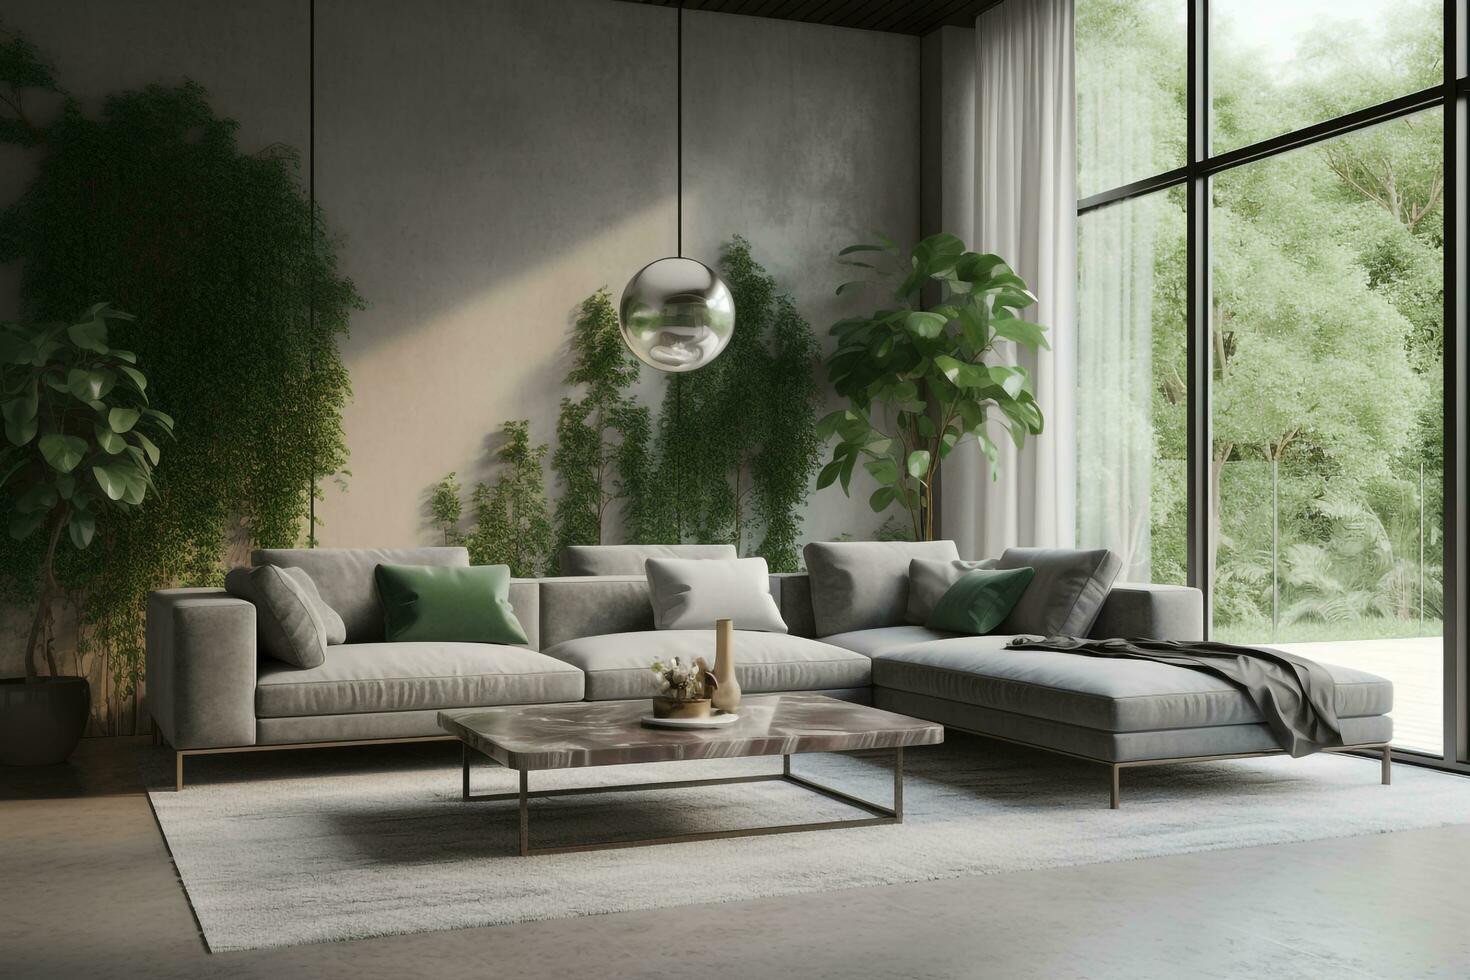 hedendaags meubilair reeks in met sofa en groen, ai gegenereerd foto